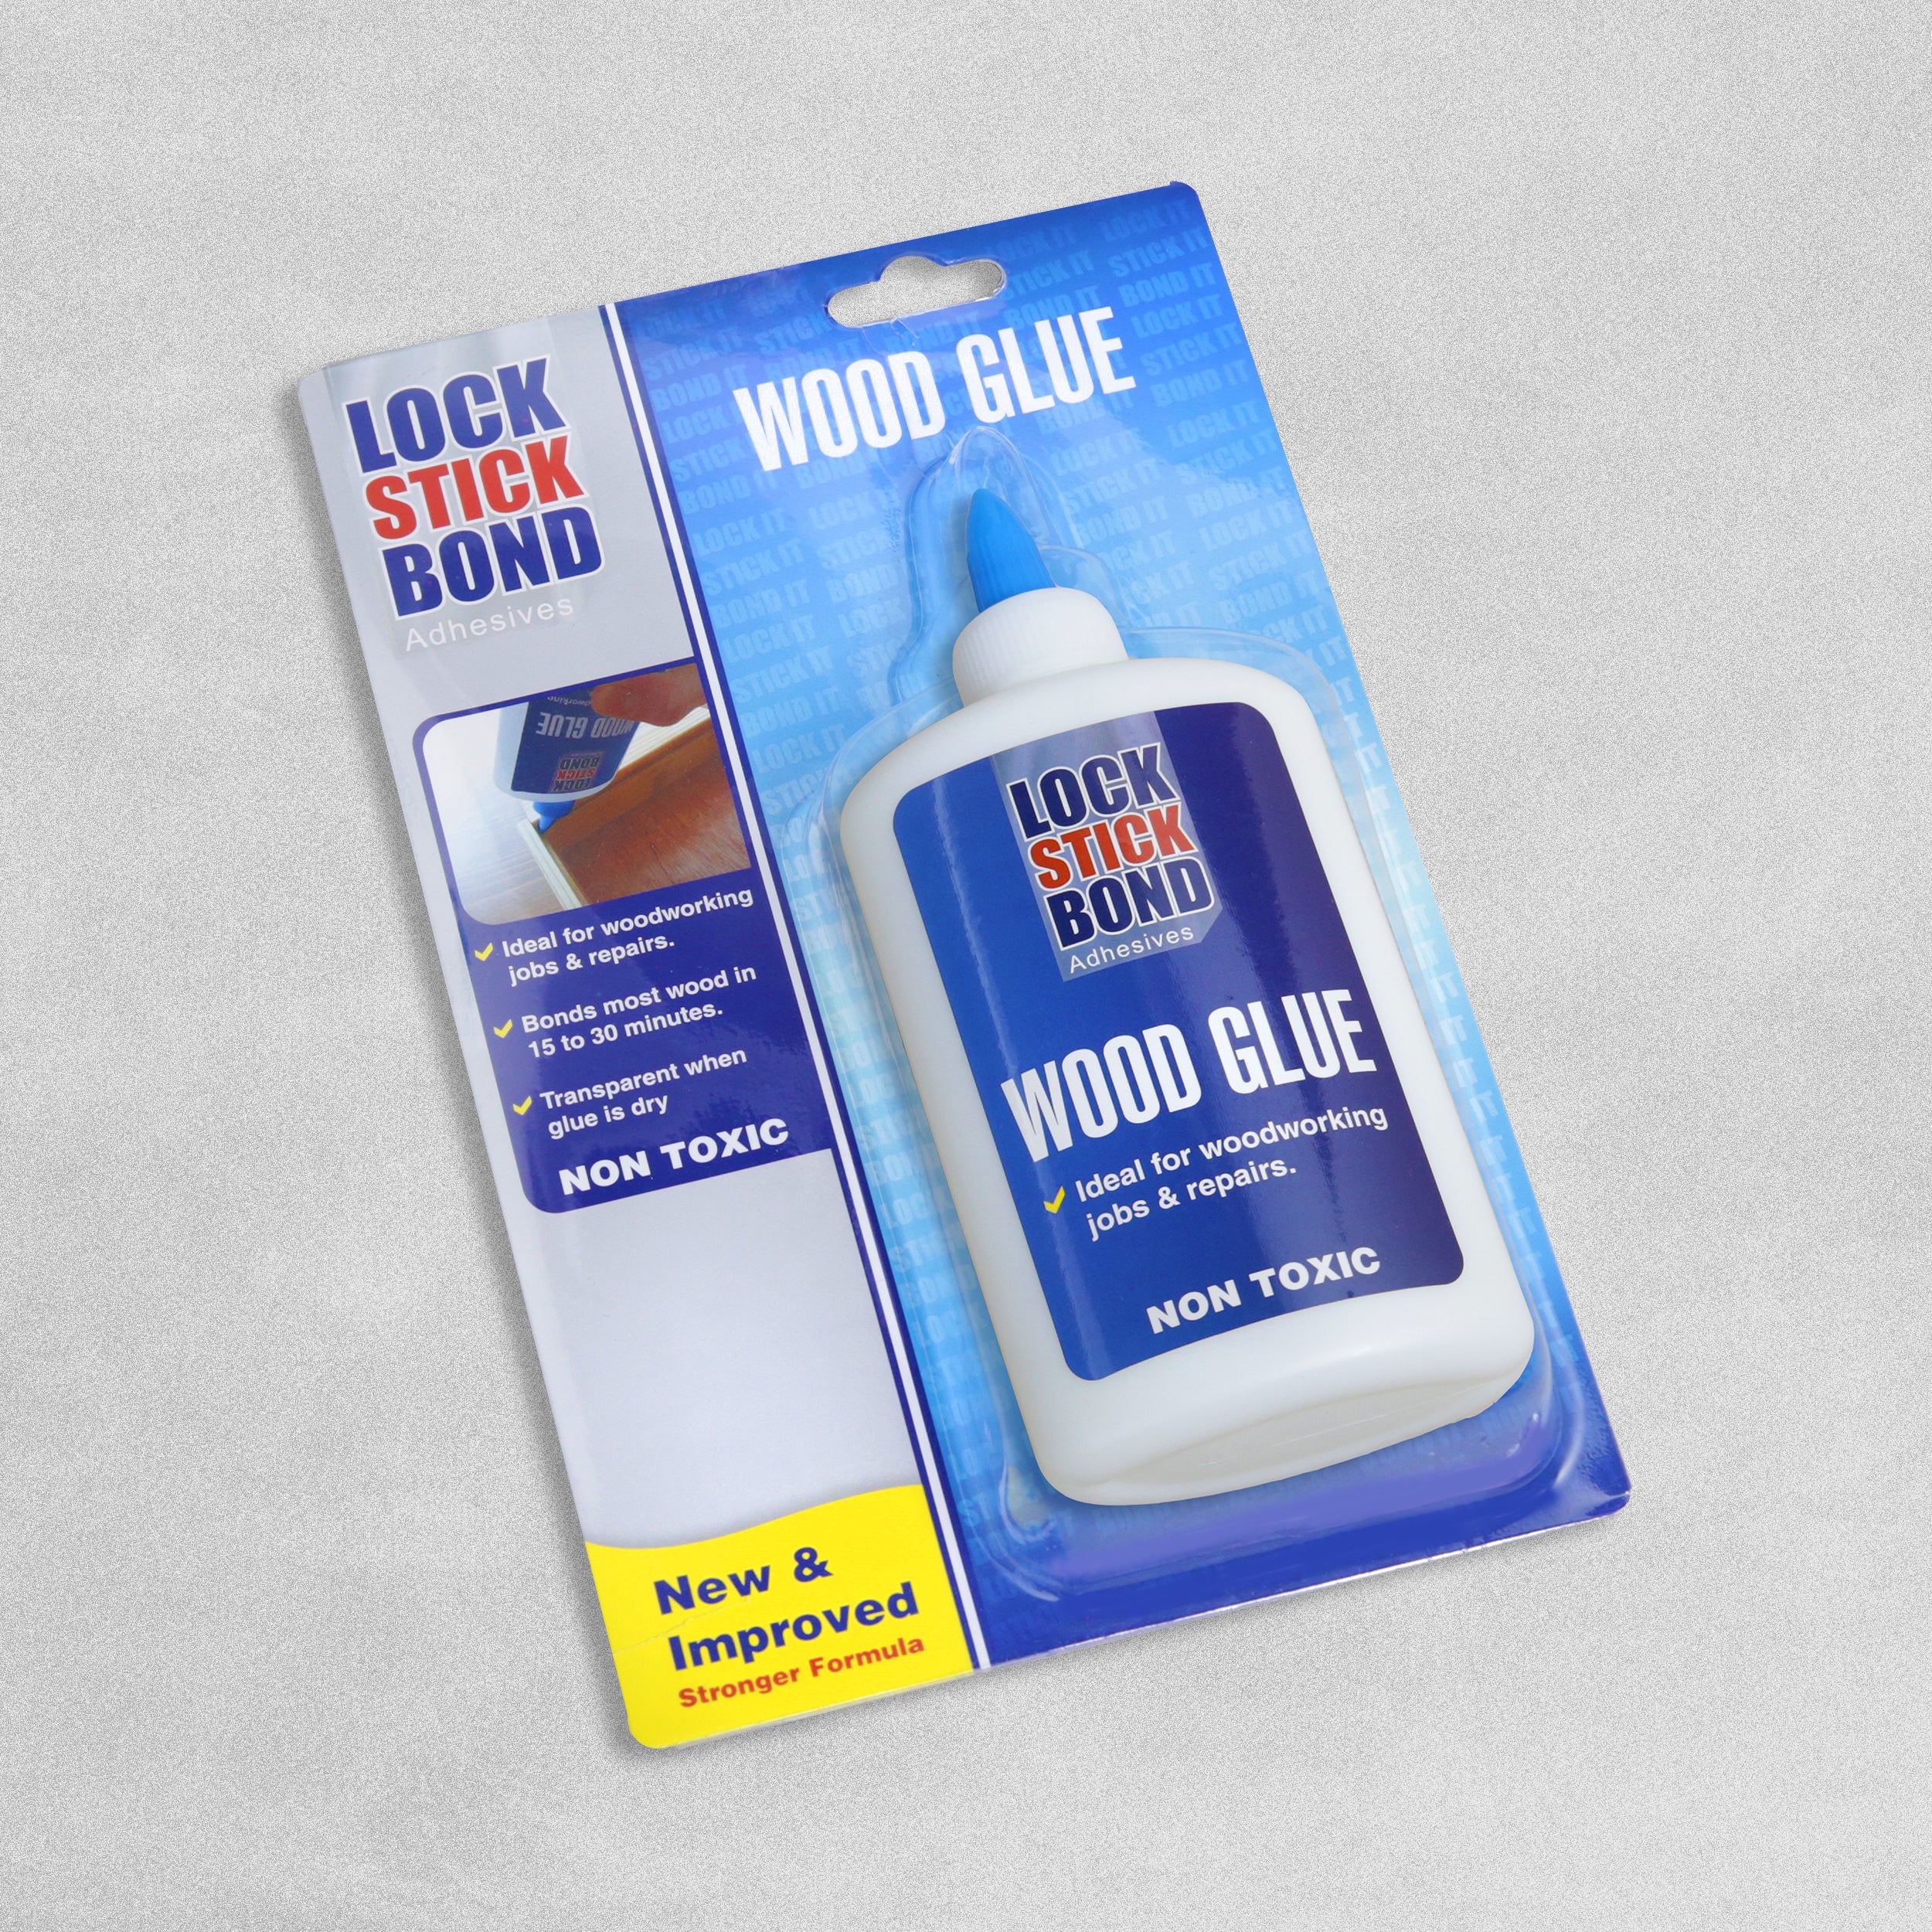 Lock Stick Bond Wood Glue - 200g